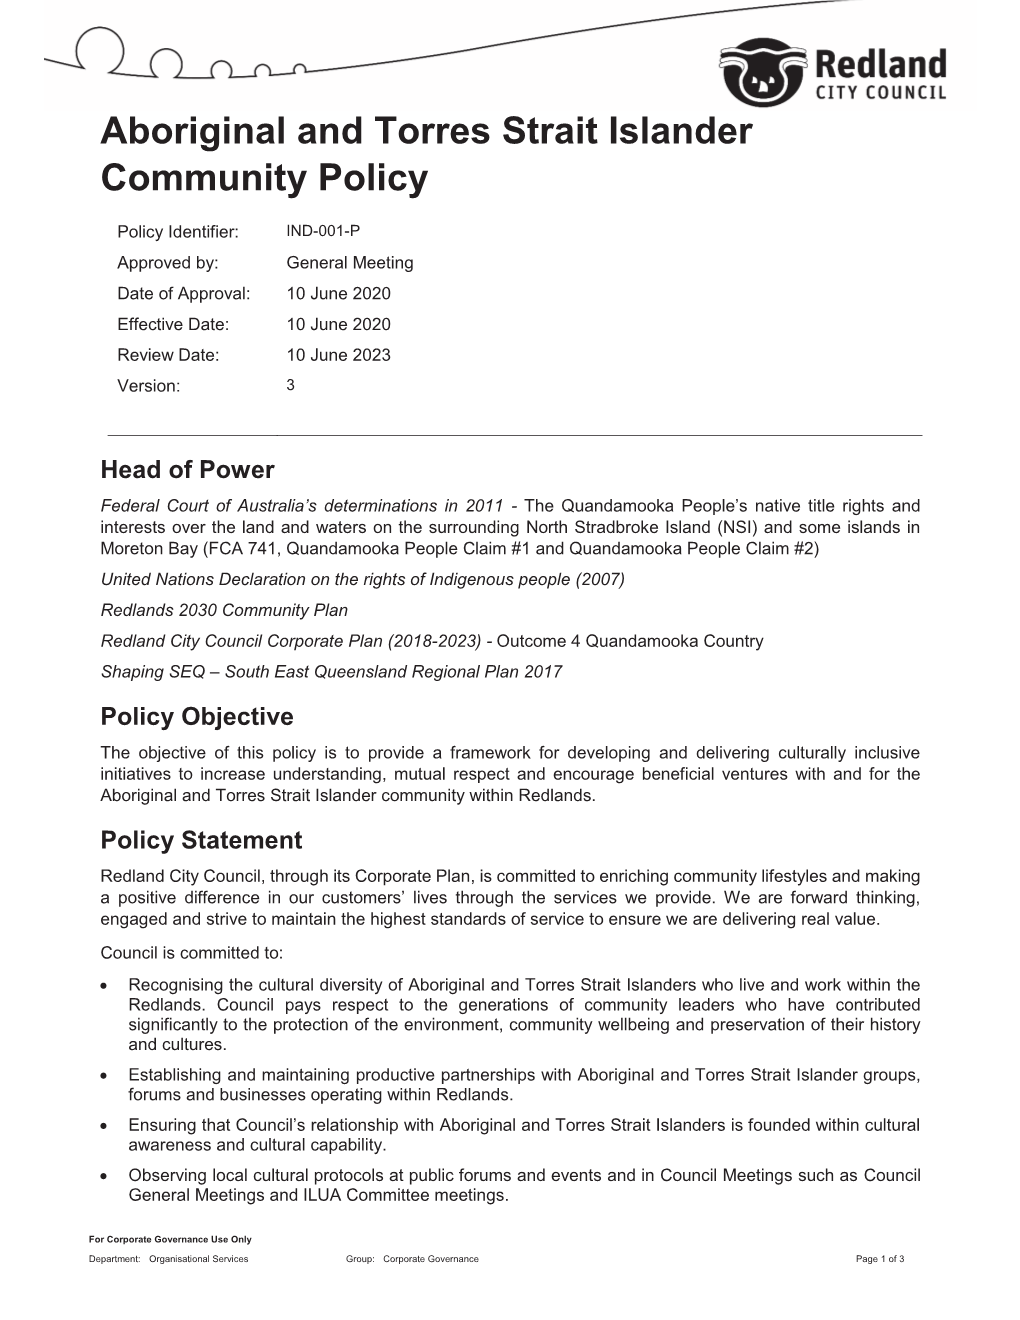 Aboriginal and Torres Strait Islander Community Policy